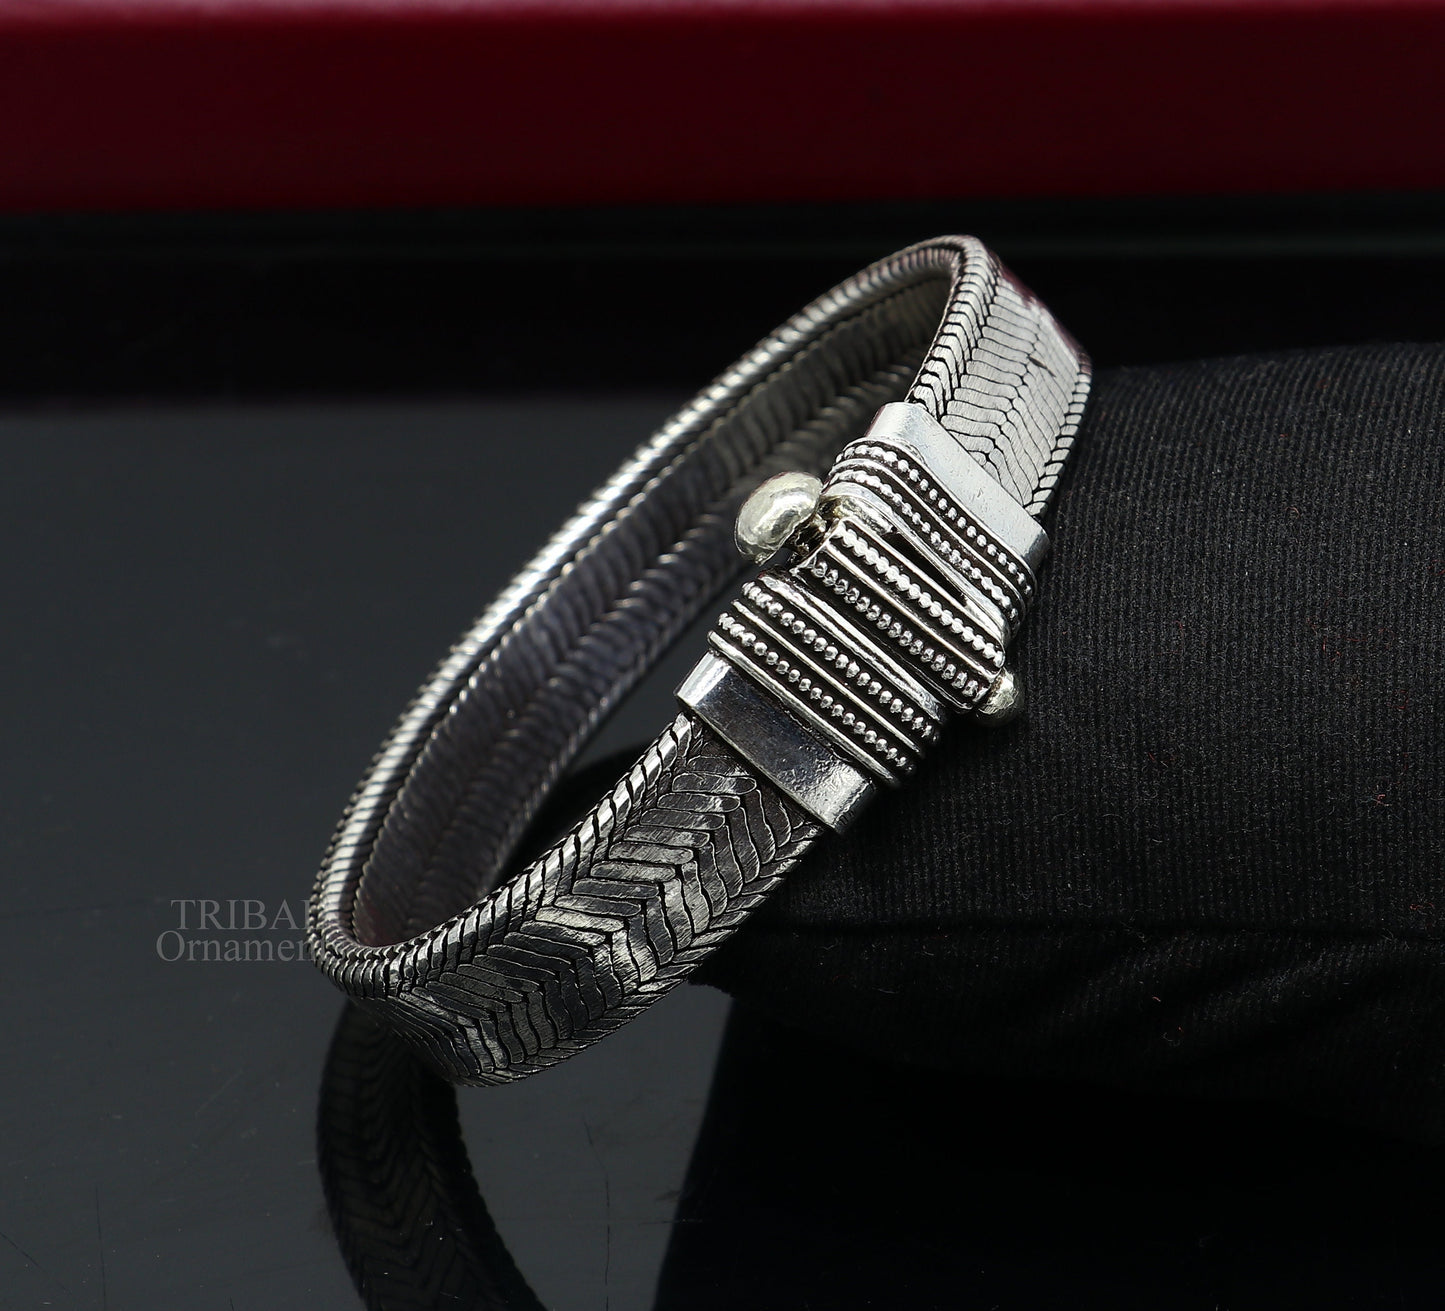 9" 925 sterling silver customized snake chain belt bracelet vintage design stylish men's gifting wrist belt bracelet jewelry NSBR550 - TRIBAL ORNAMENTS